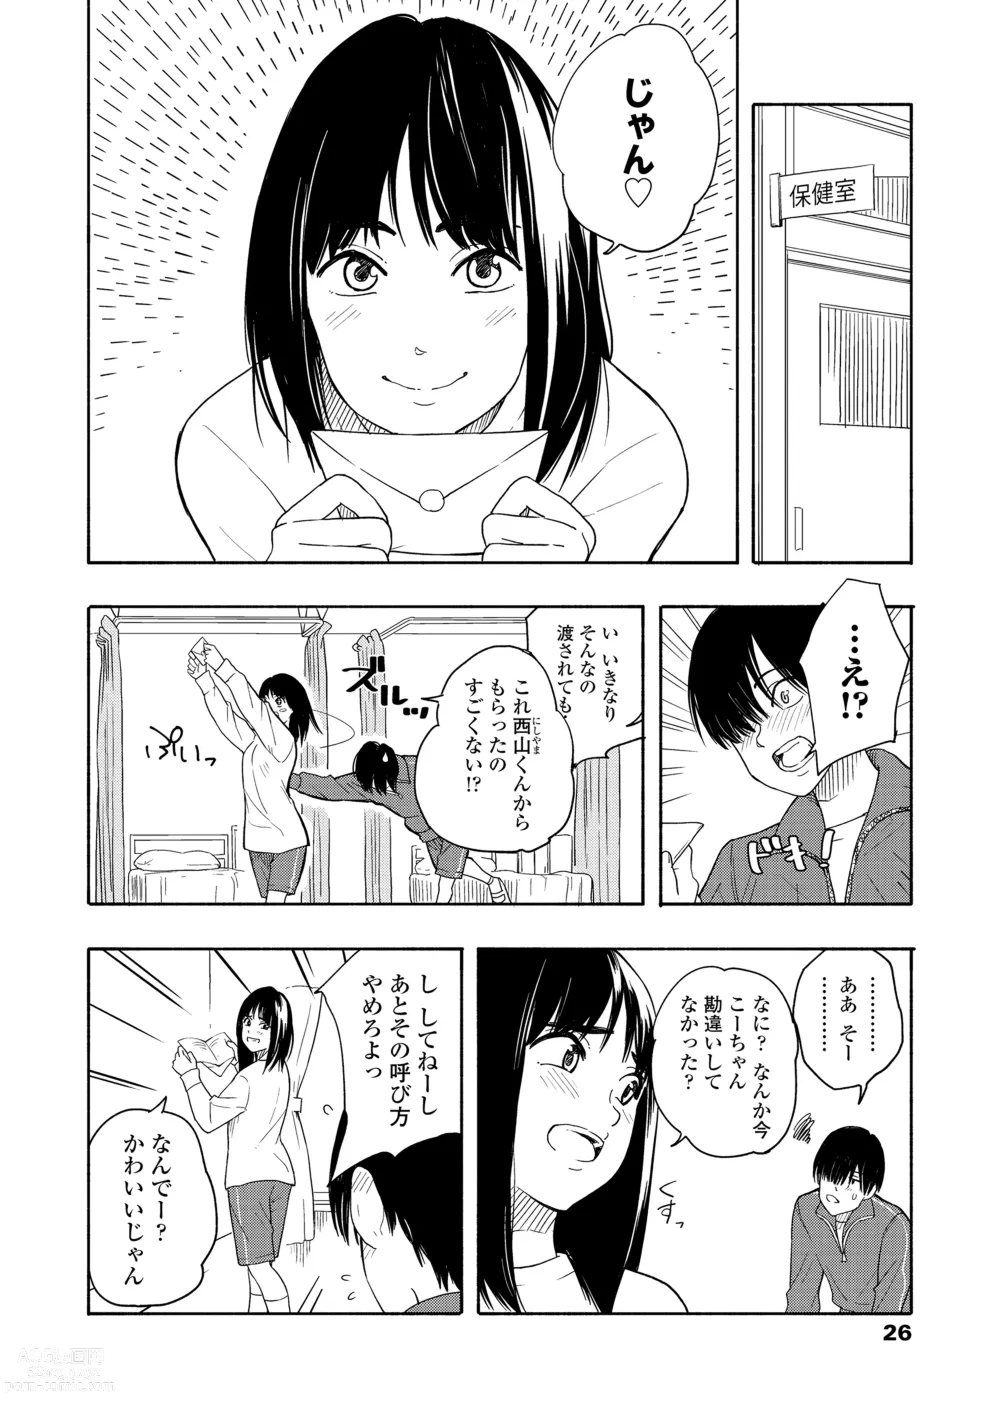 Page 28 of manga Shishunki no Eros - puberty eros + DLsite Kounyu Tokuten